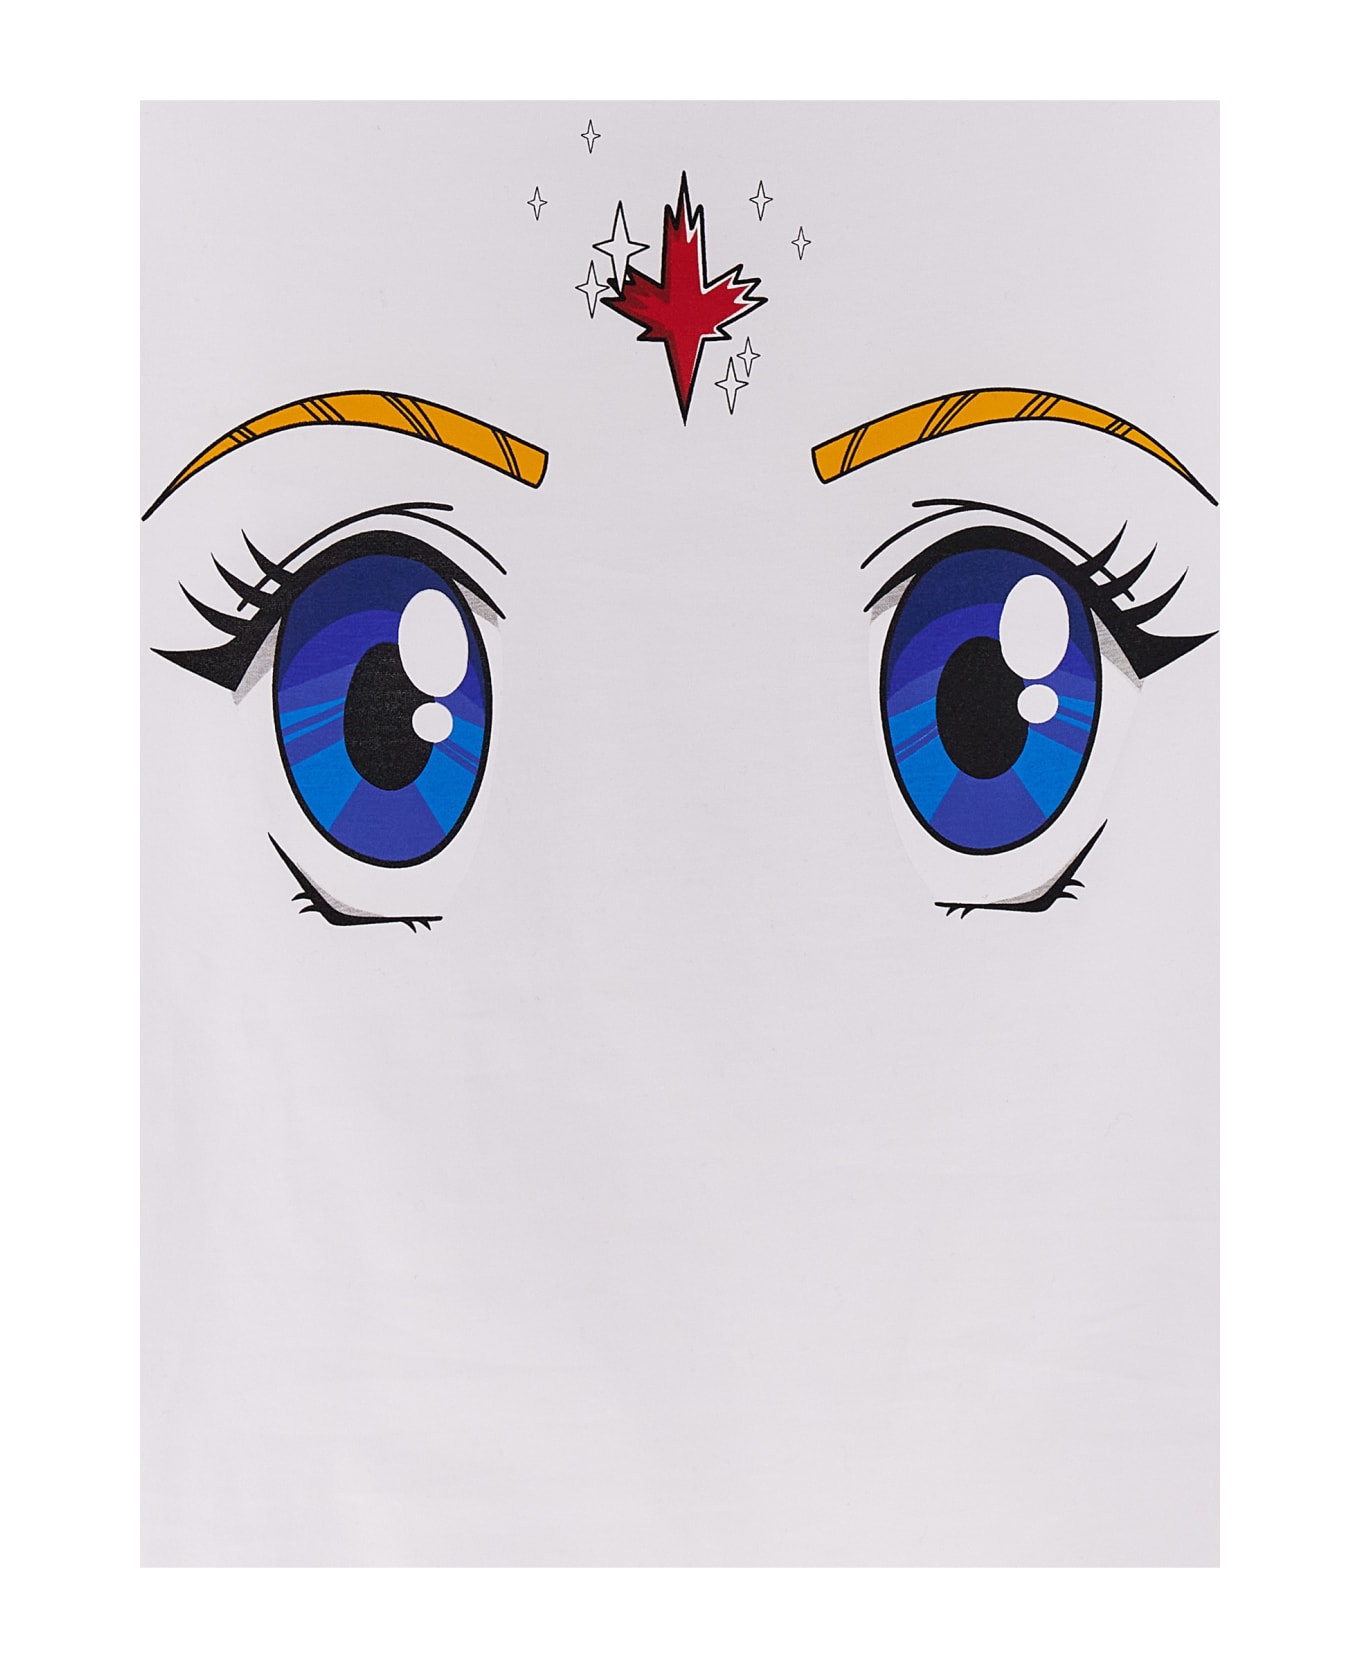 Dsquared2 Sailor Moon T-shirt - WHITE Tシャツ